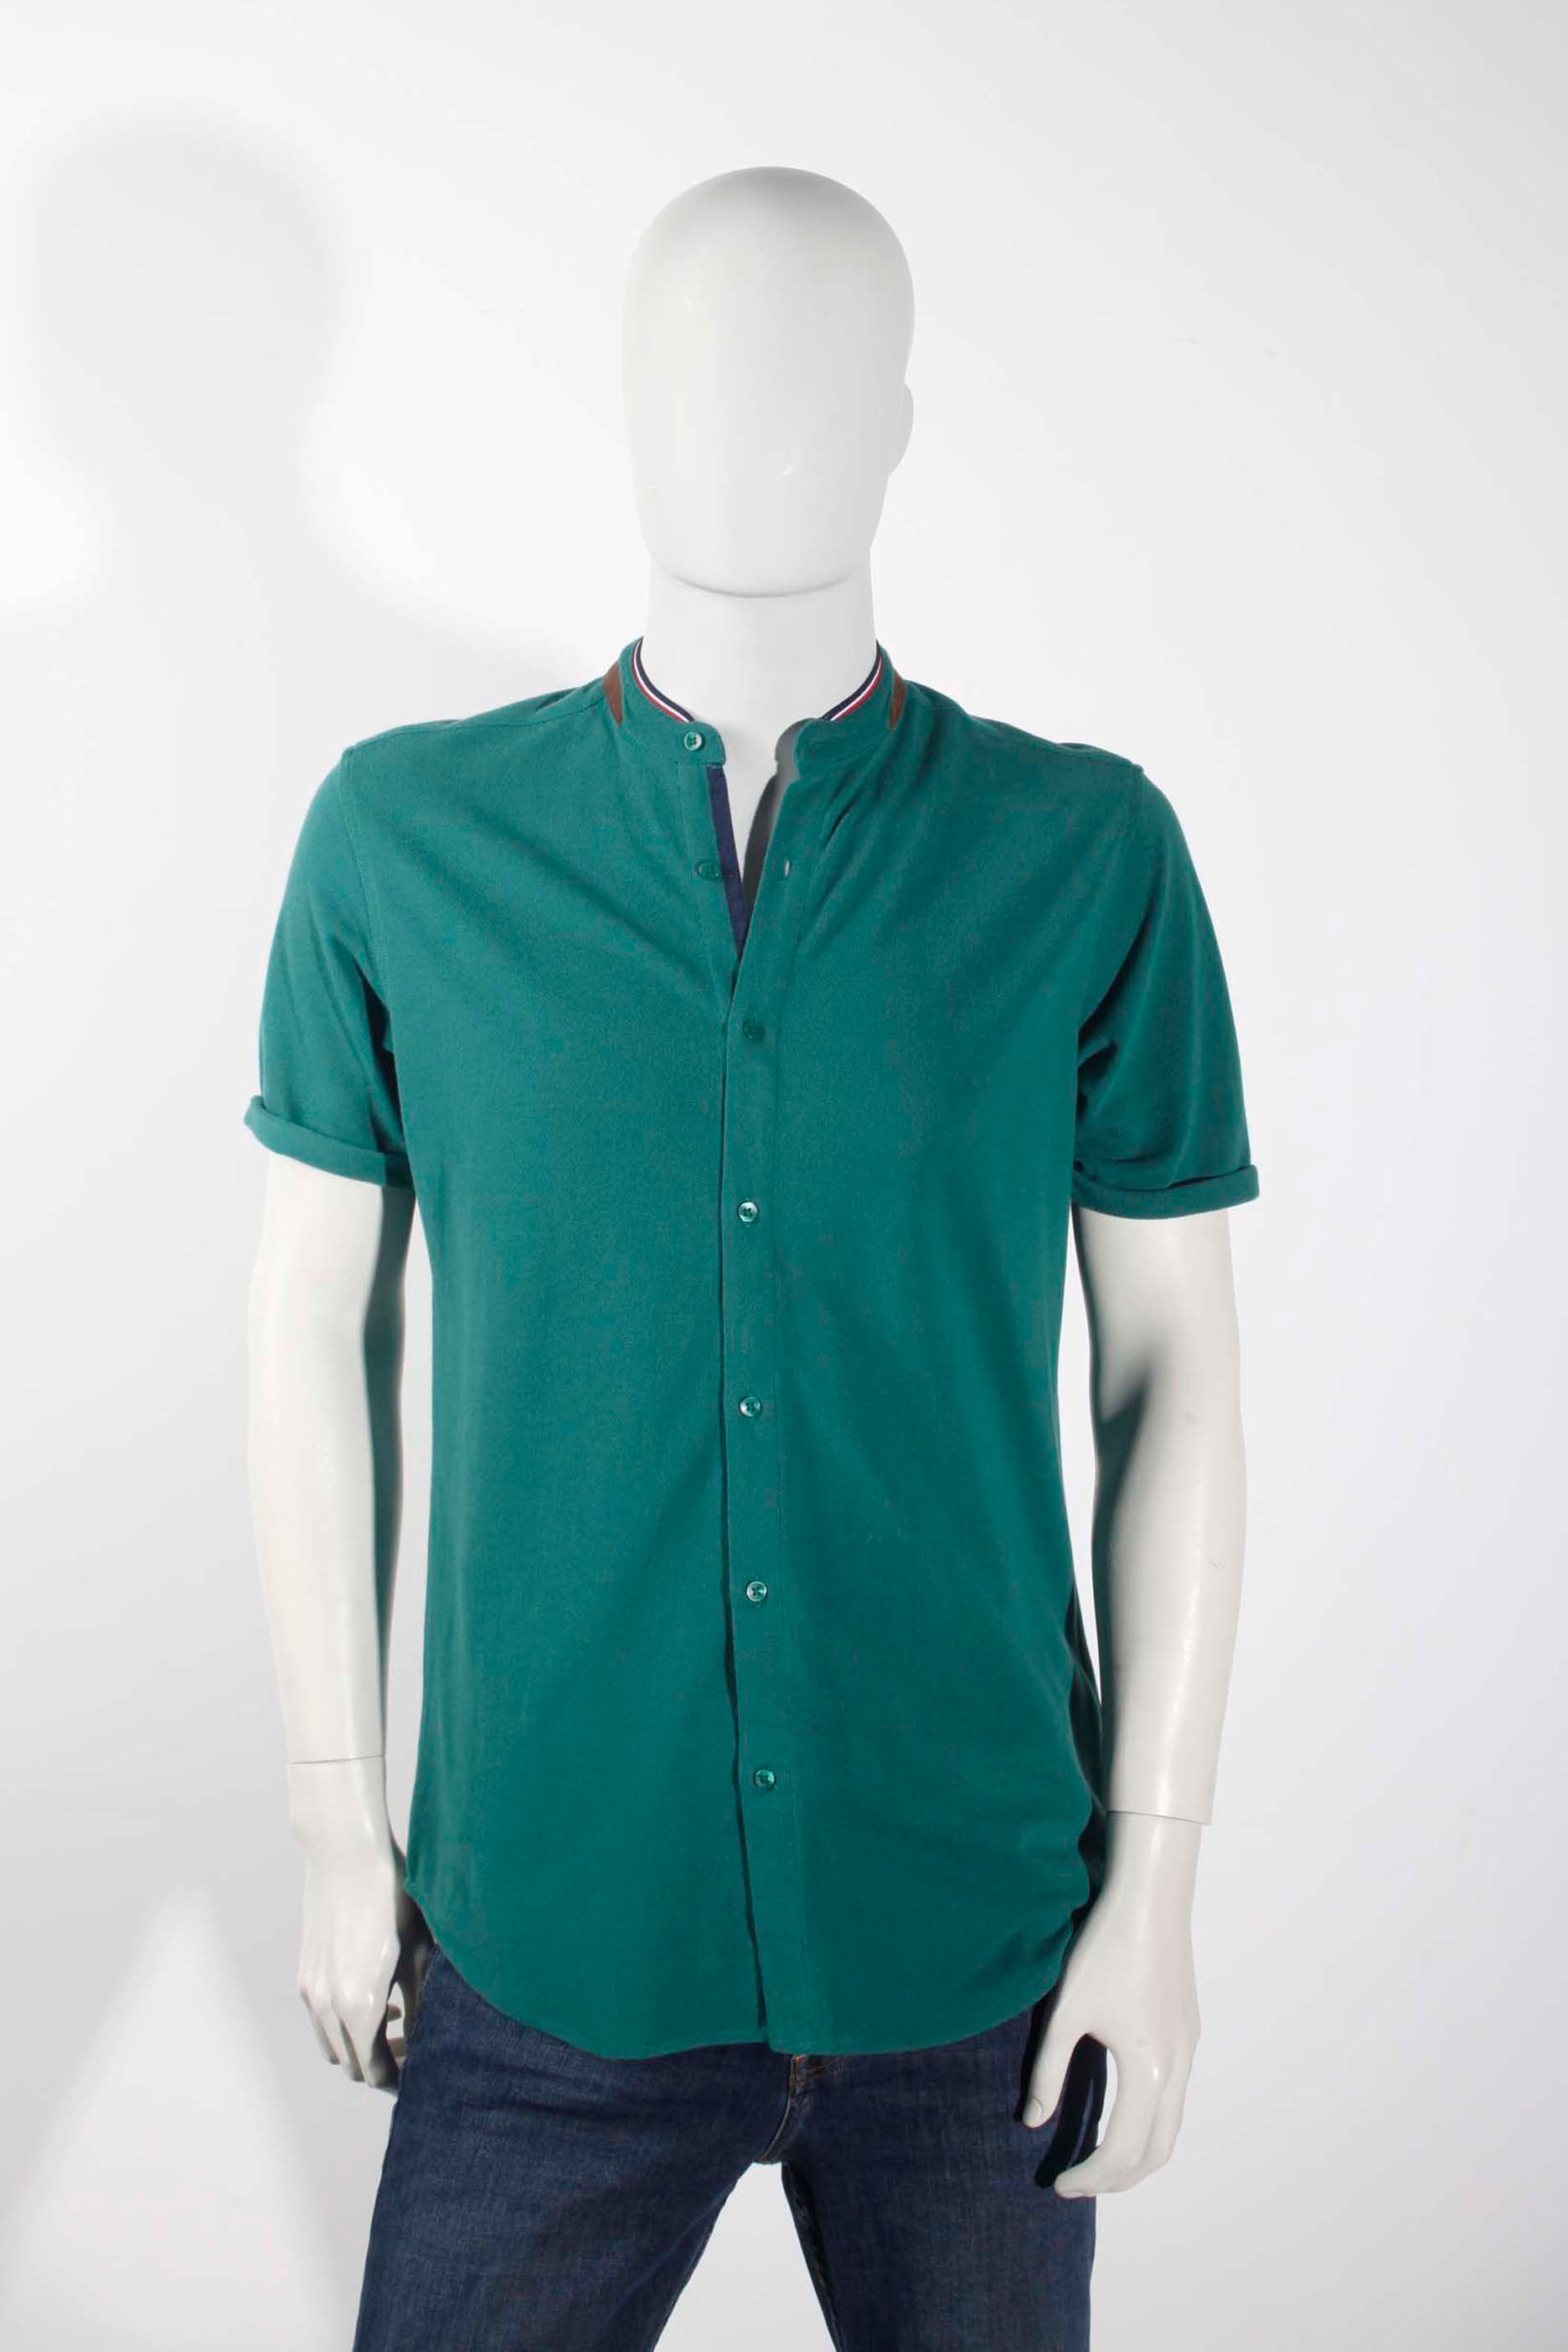 Mens Green Collarless Polo Shirt (Medium)